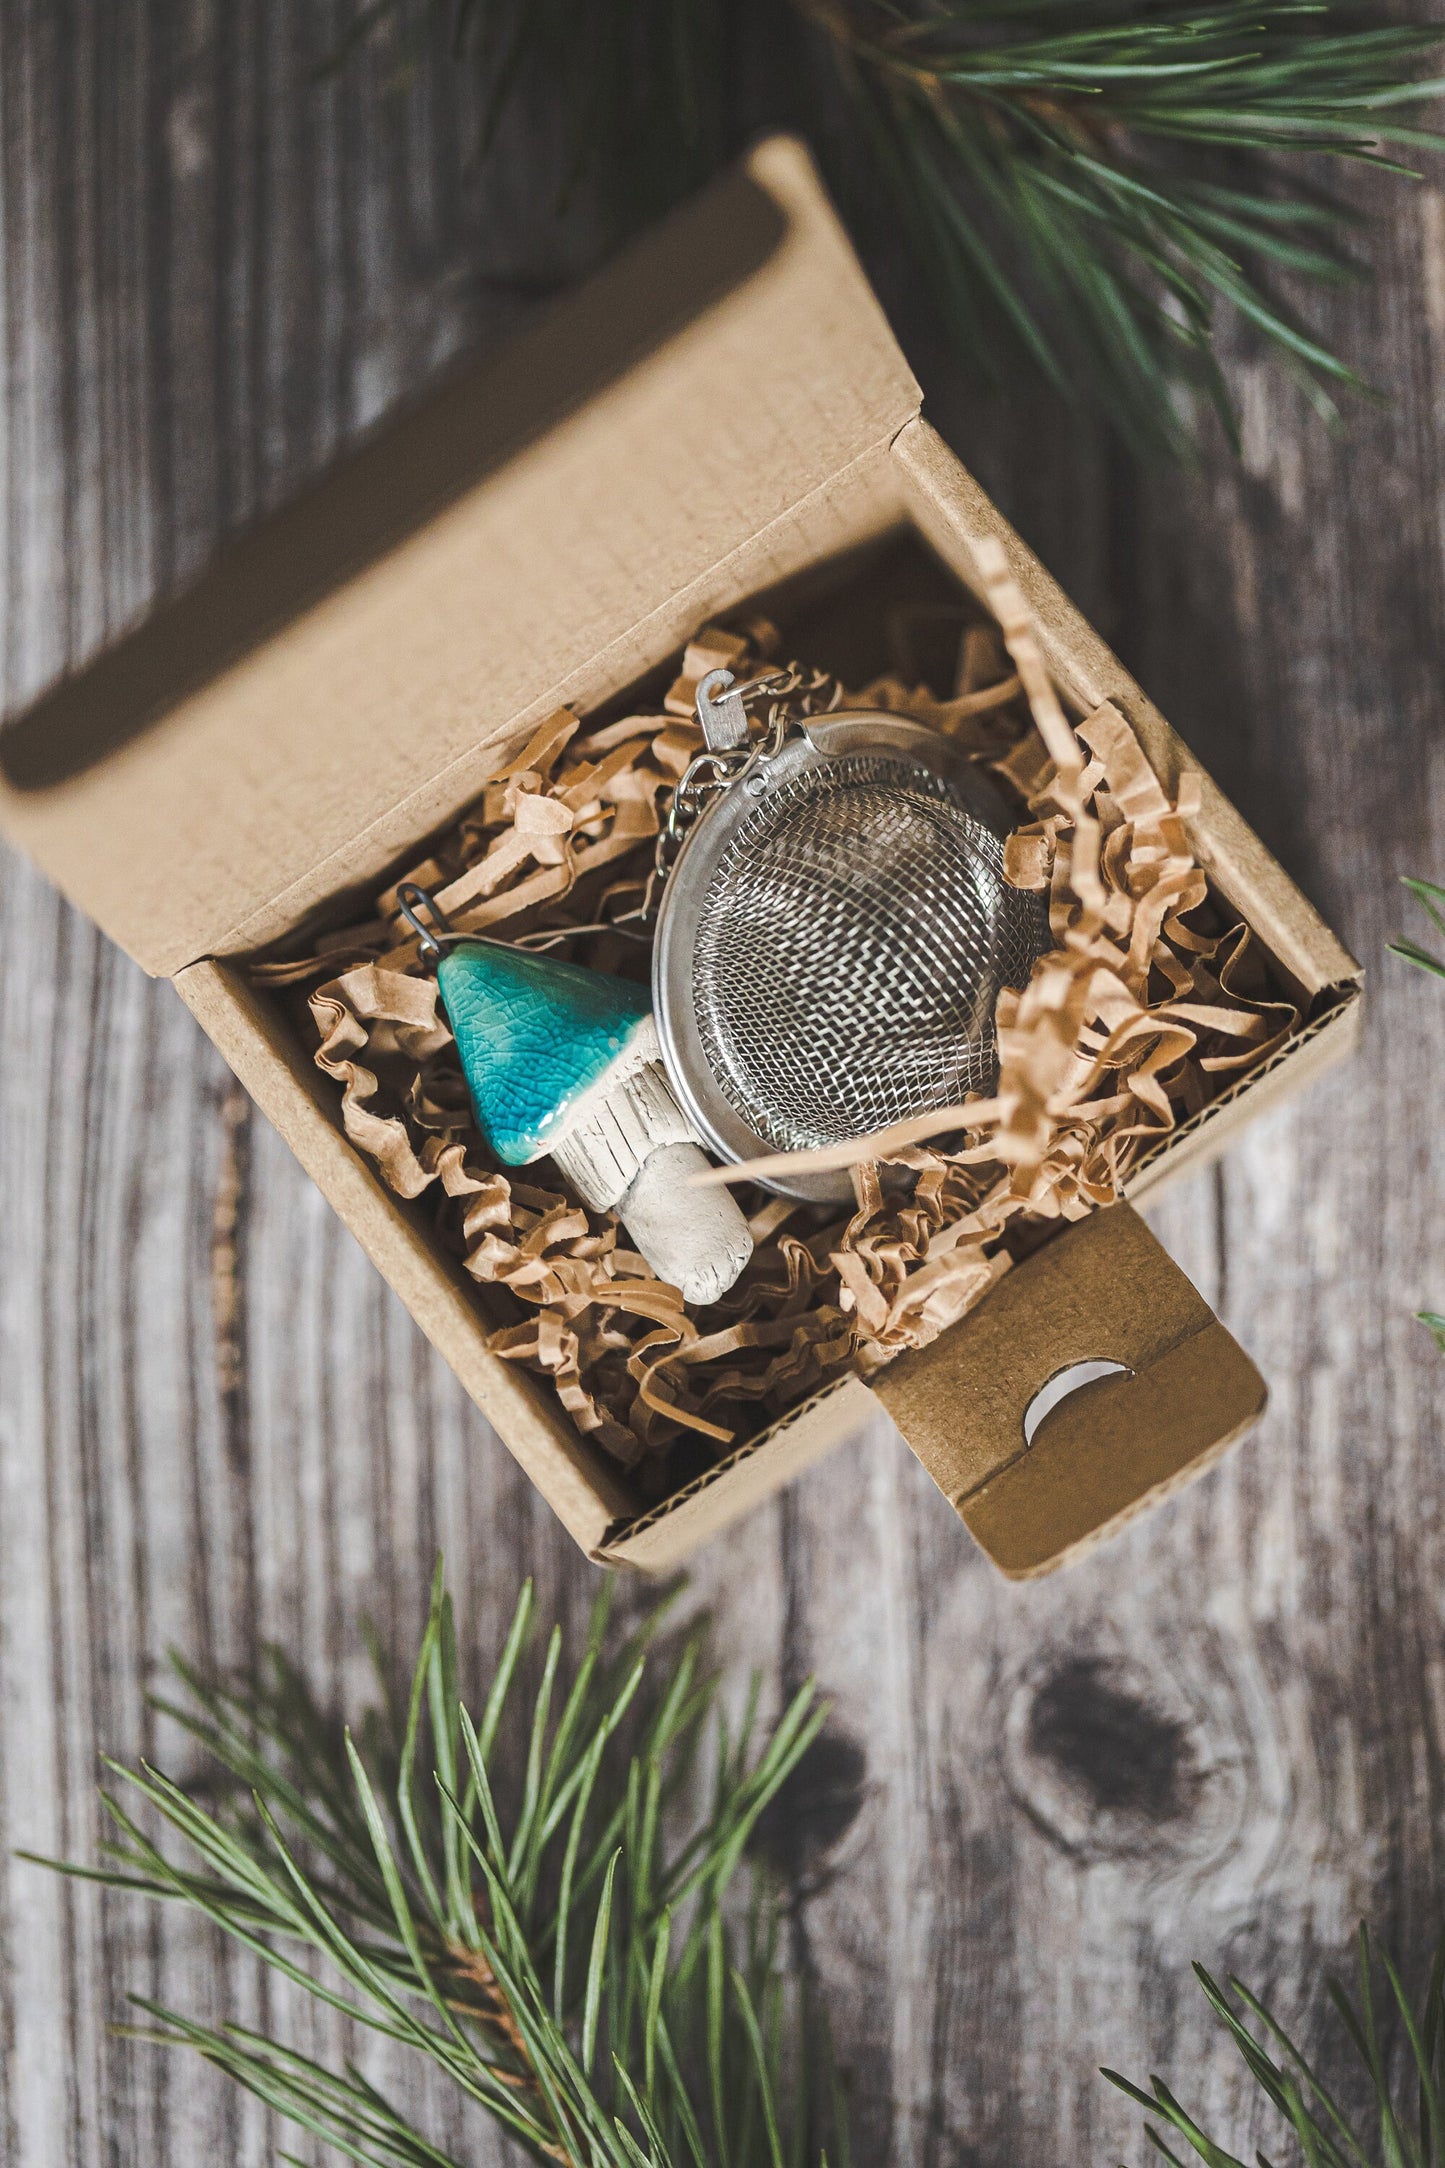 Loose leaf tea strainer with ocean blue mushroom - Tea infuser with ceramic mushroom charm - Christmas gift - Easter gift